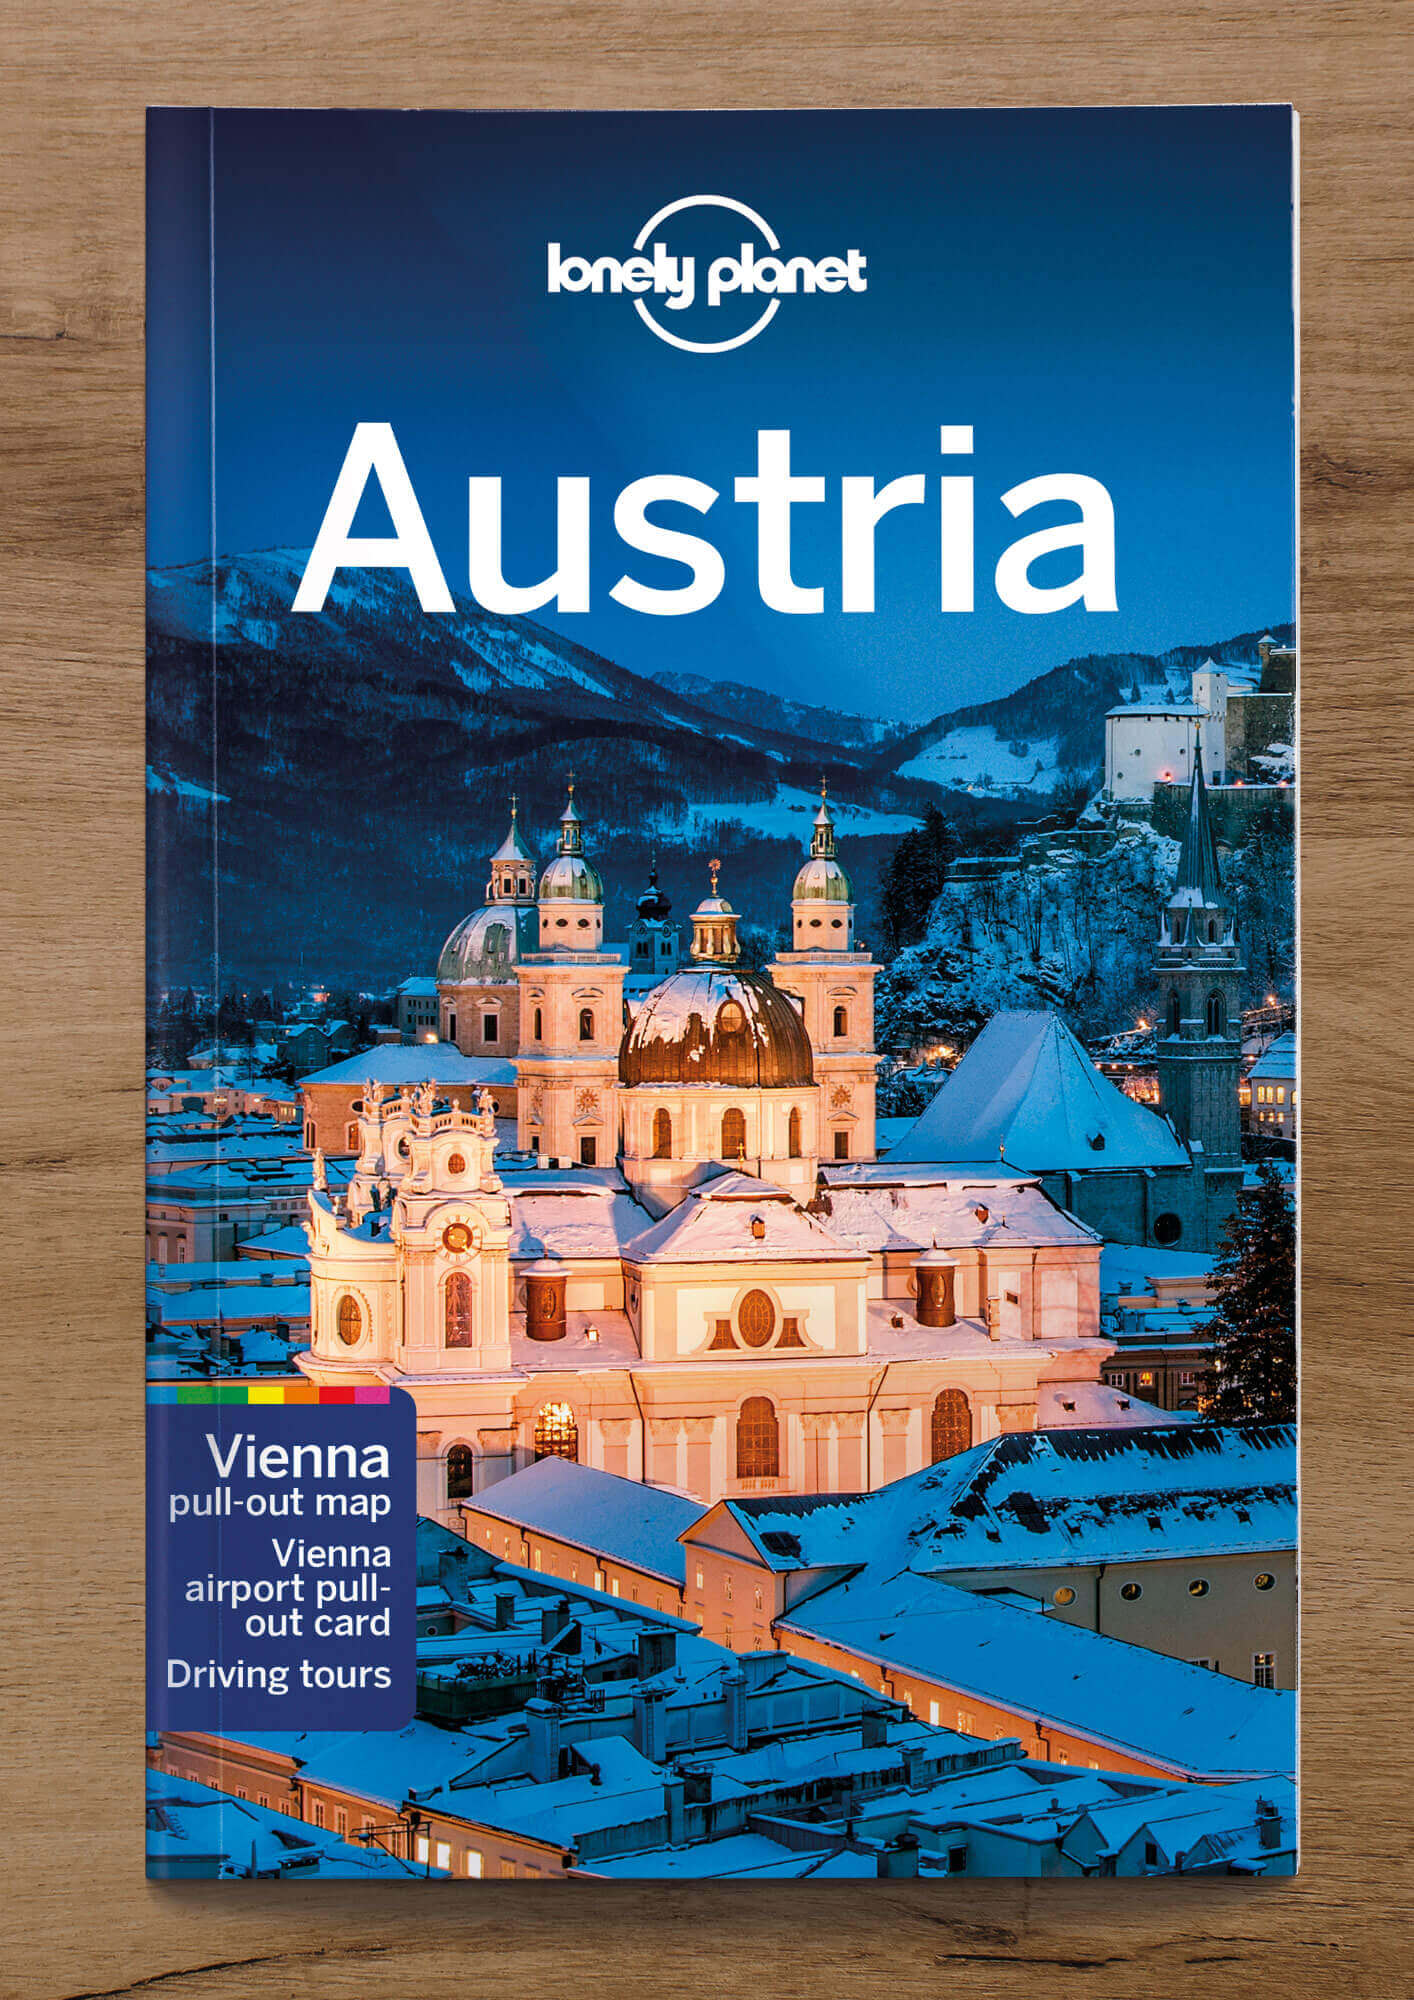  Bestselling Lonelyplanet ebook bundle - Austria